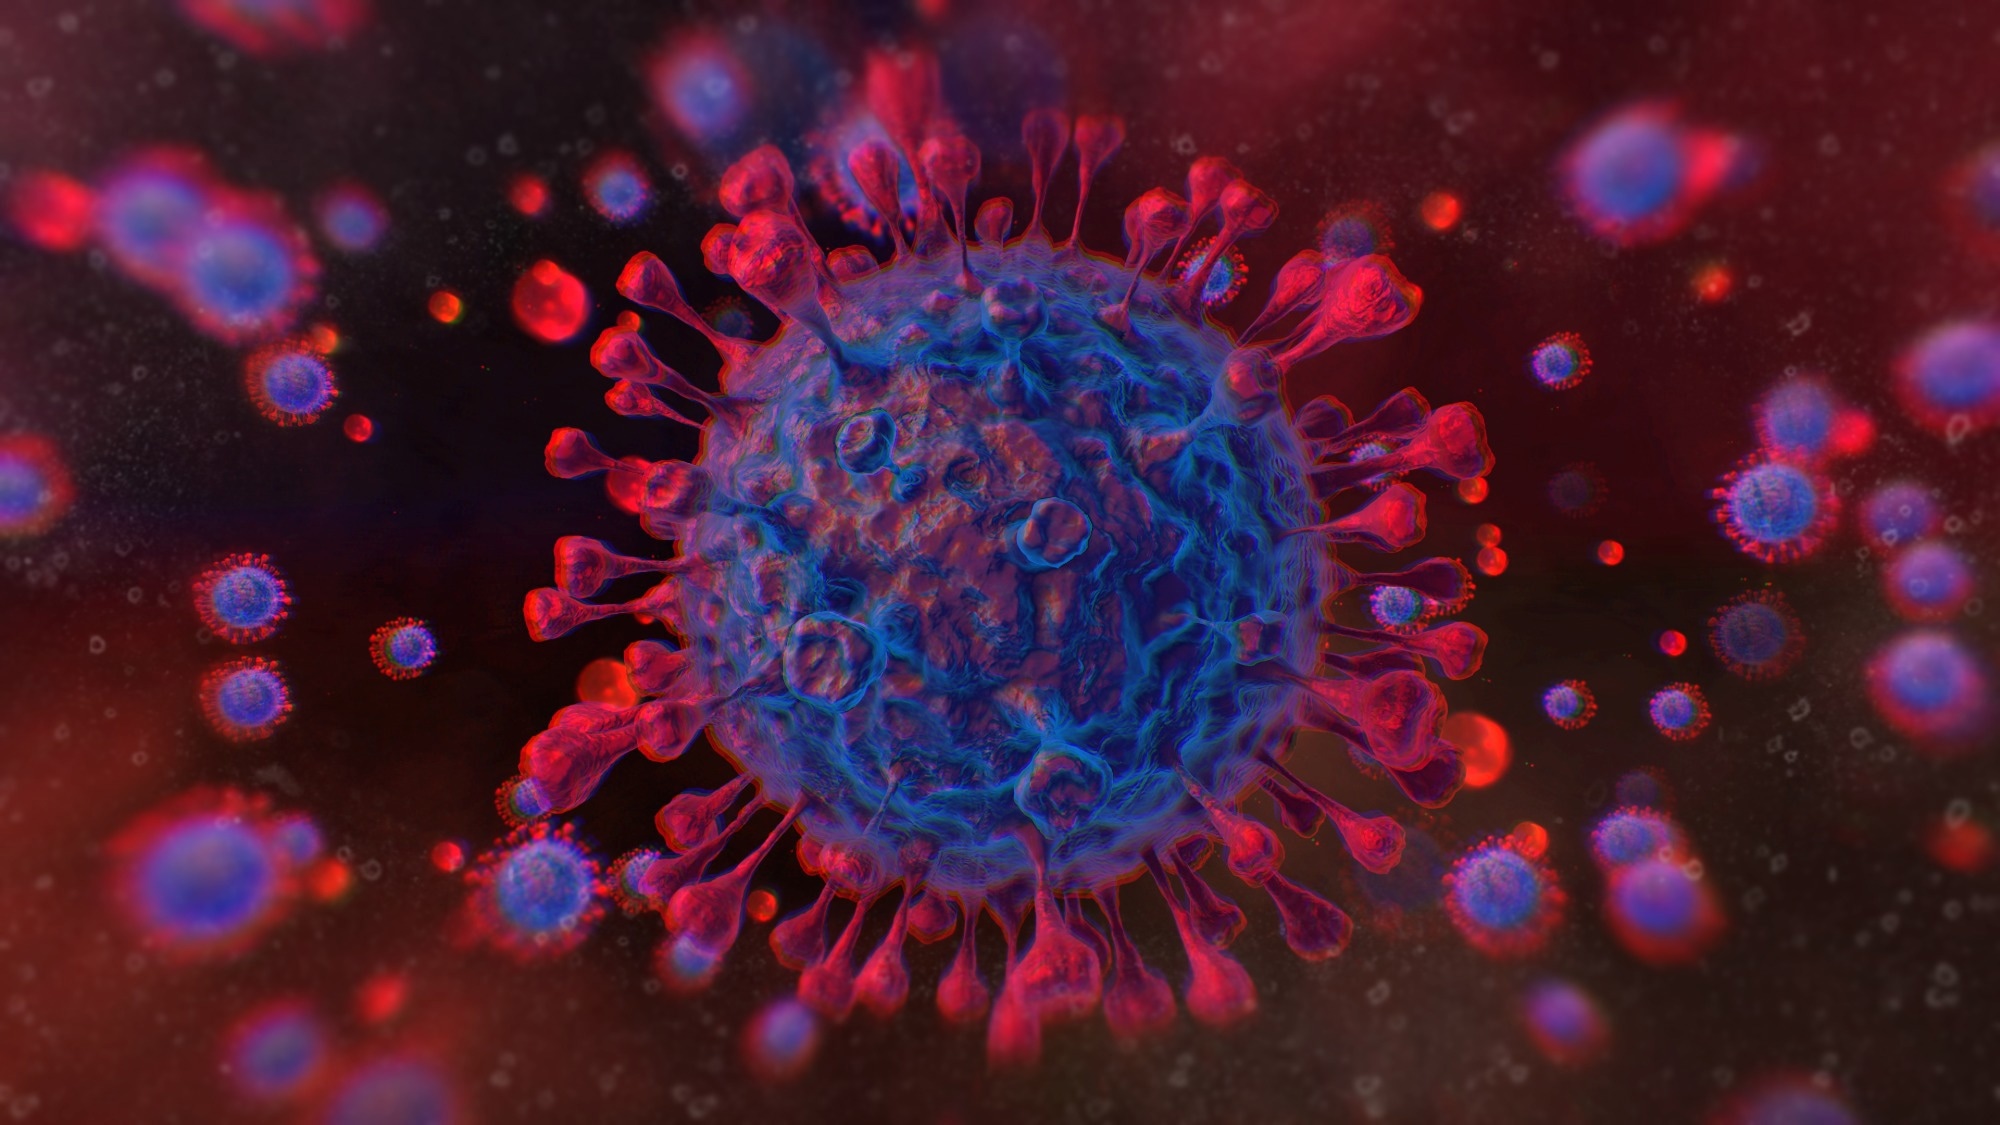 Study: The coronavirus recombination pathway. Image Credit: eyeidea/Shutterstock.com